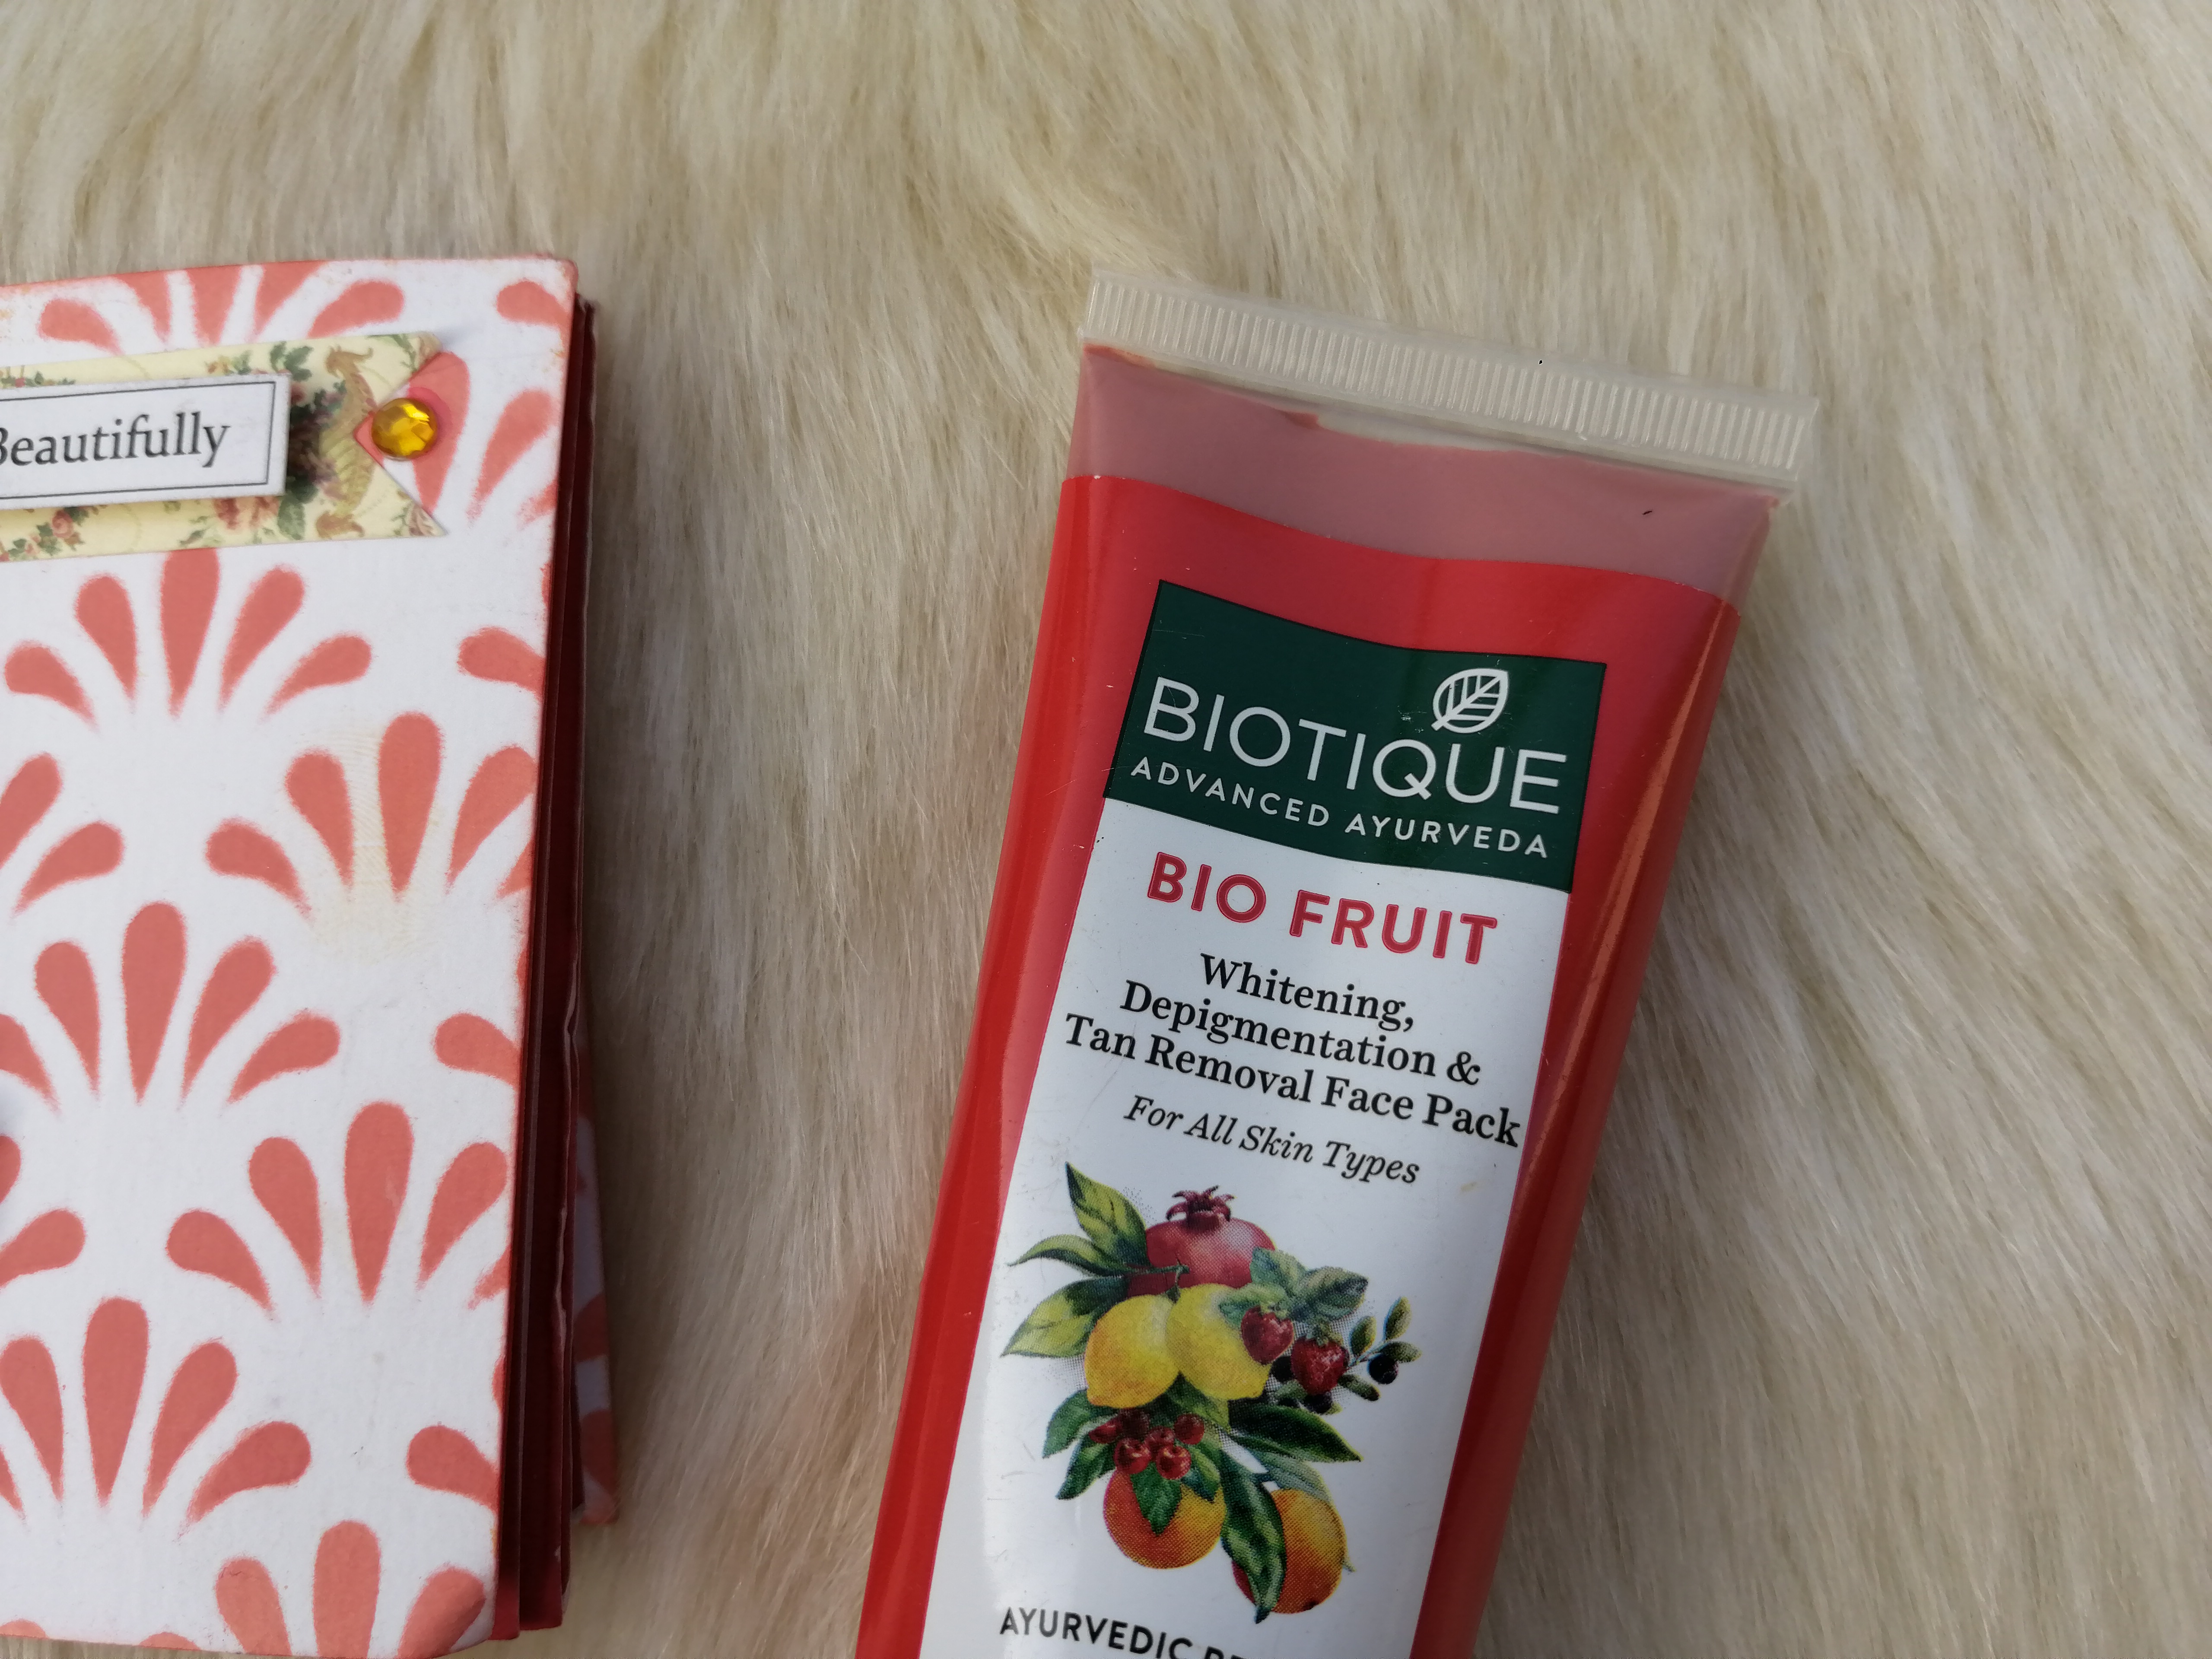 Biotique Bio Fruit Face Pack (Whitening, Depigmentation & Tan Removal) | Review